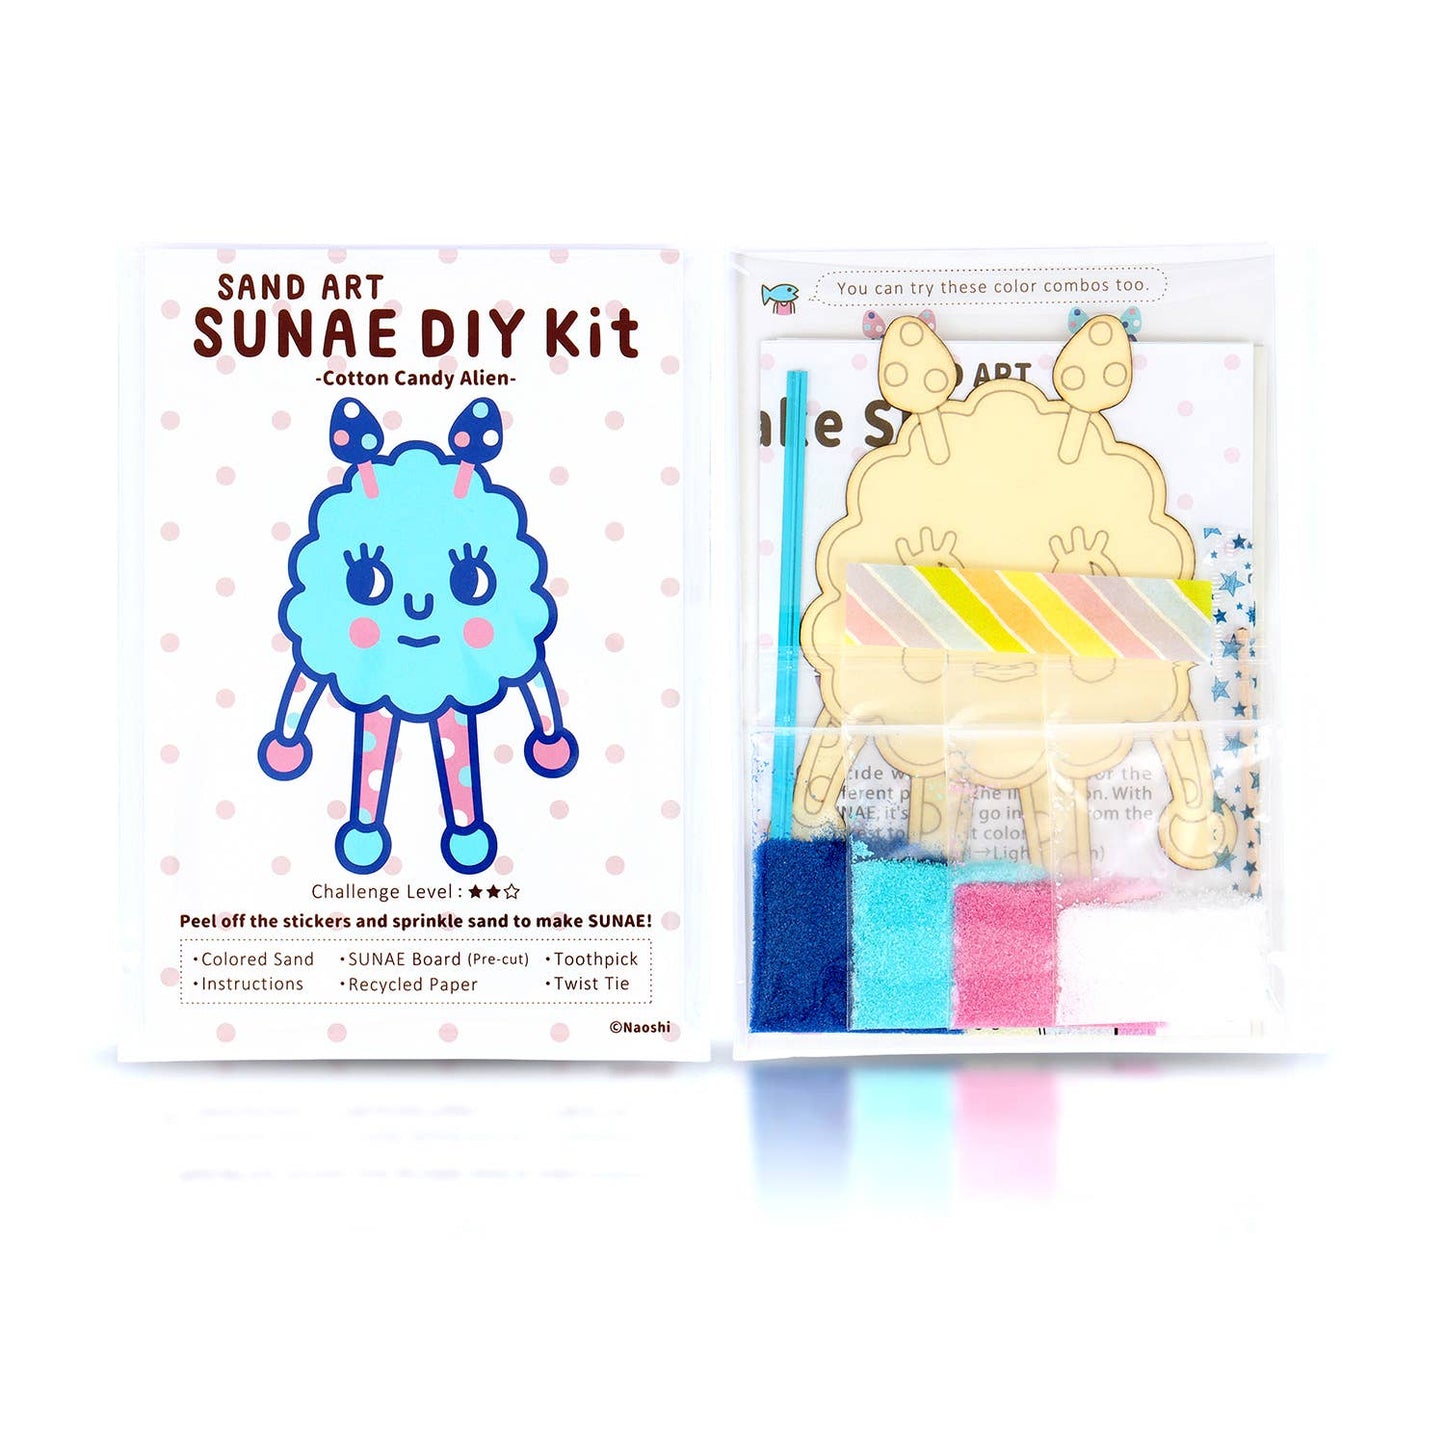 【SUNAE(sand art) DIY Kit】 Alien Cotton Candy